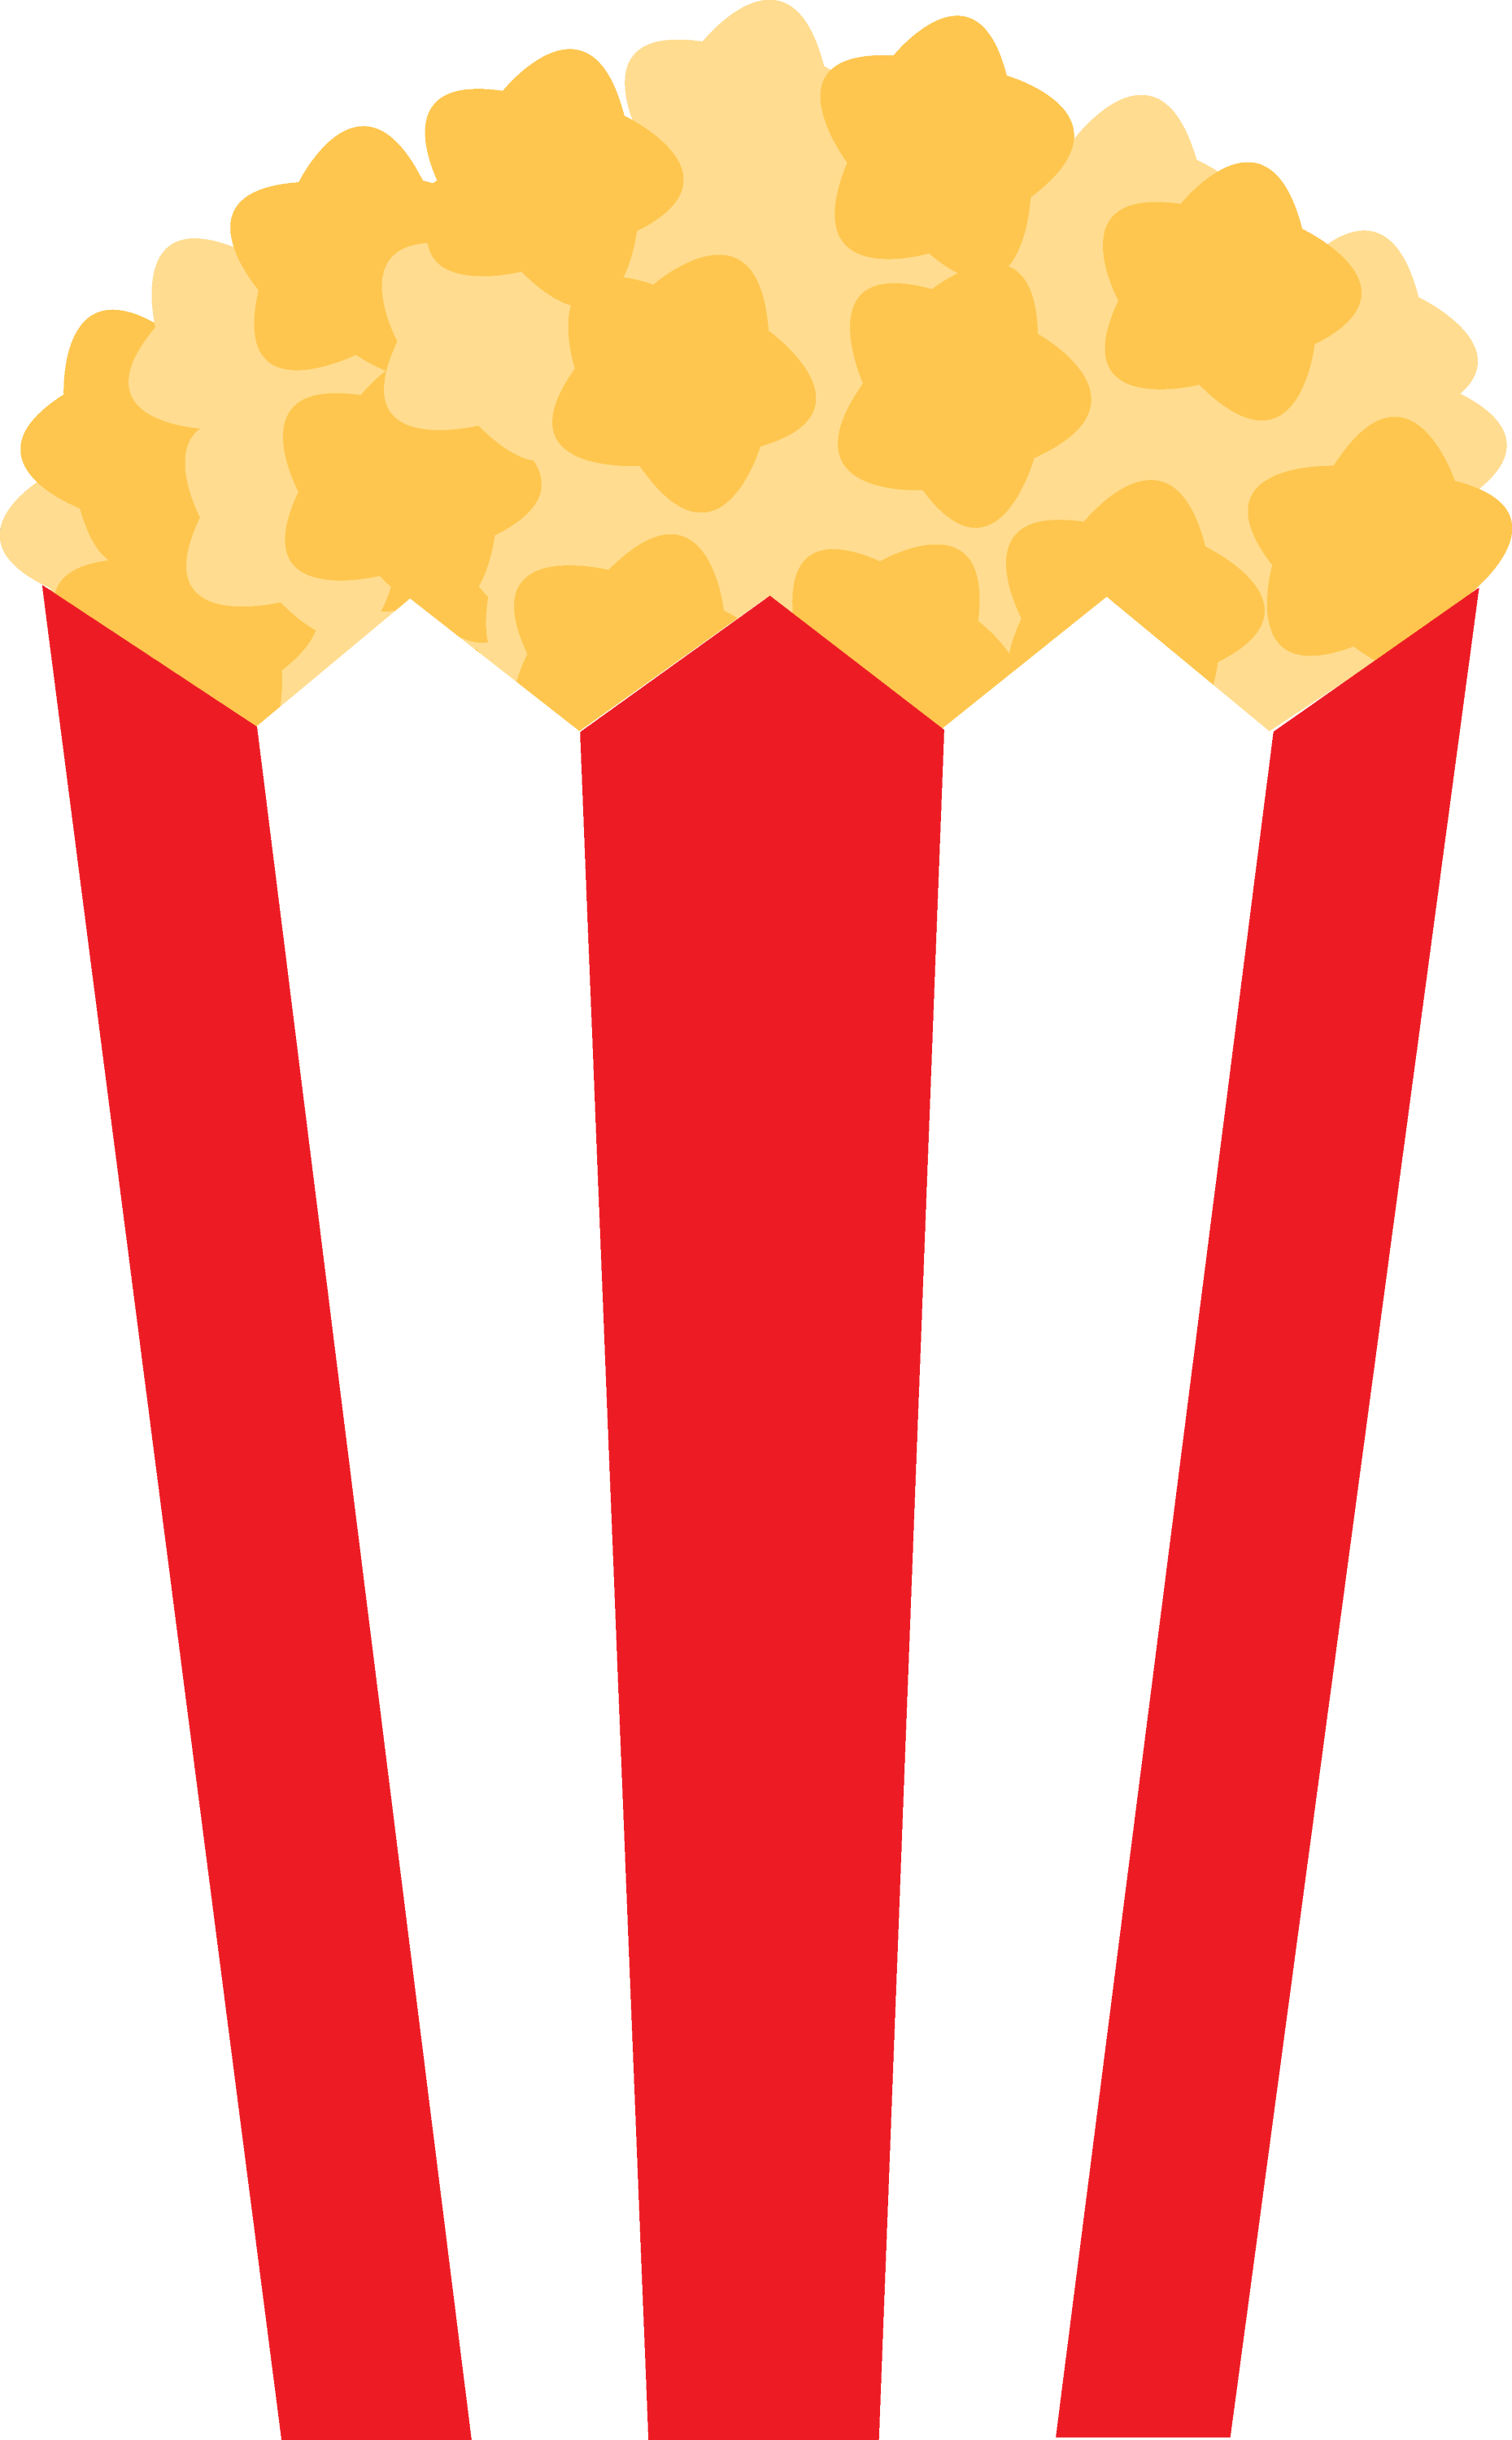 Bag of Popcorn - Free Clip Art